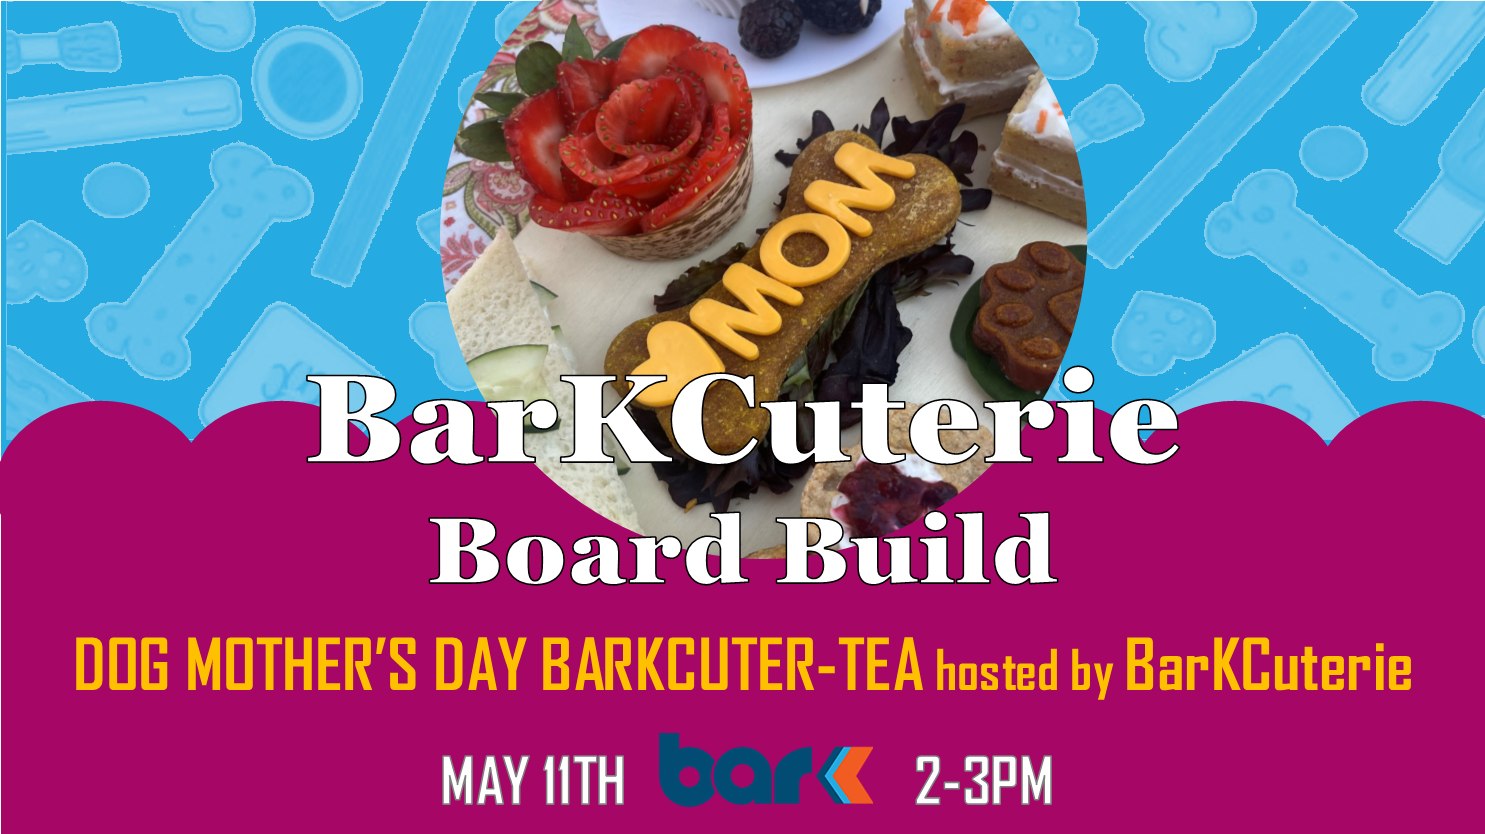 BarKCuterie Board build dog mother's day Barkcuter-tea hosted by BarKCuterie. May 11th Bar K 2 to 3 pm